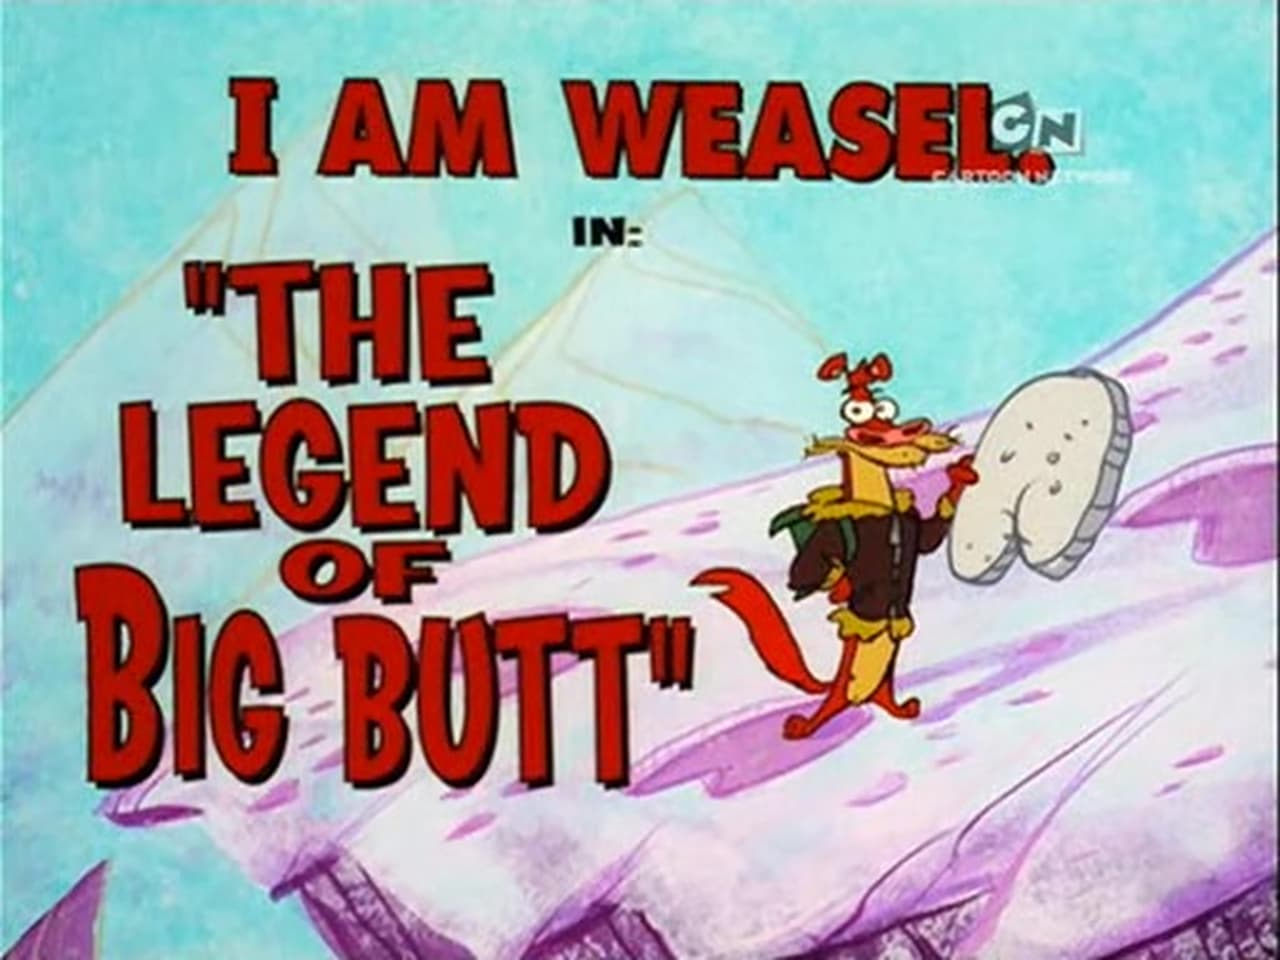 The Legend of Big Butt